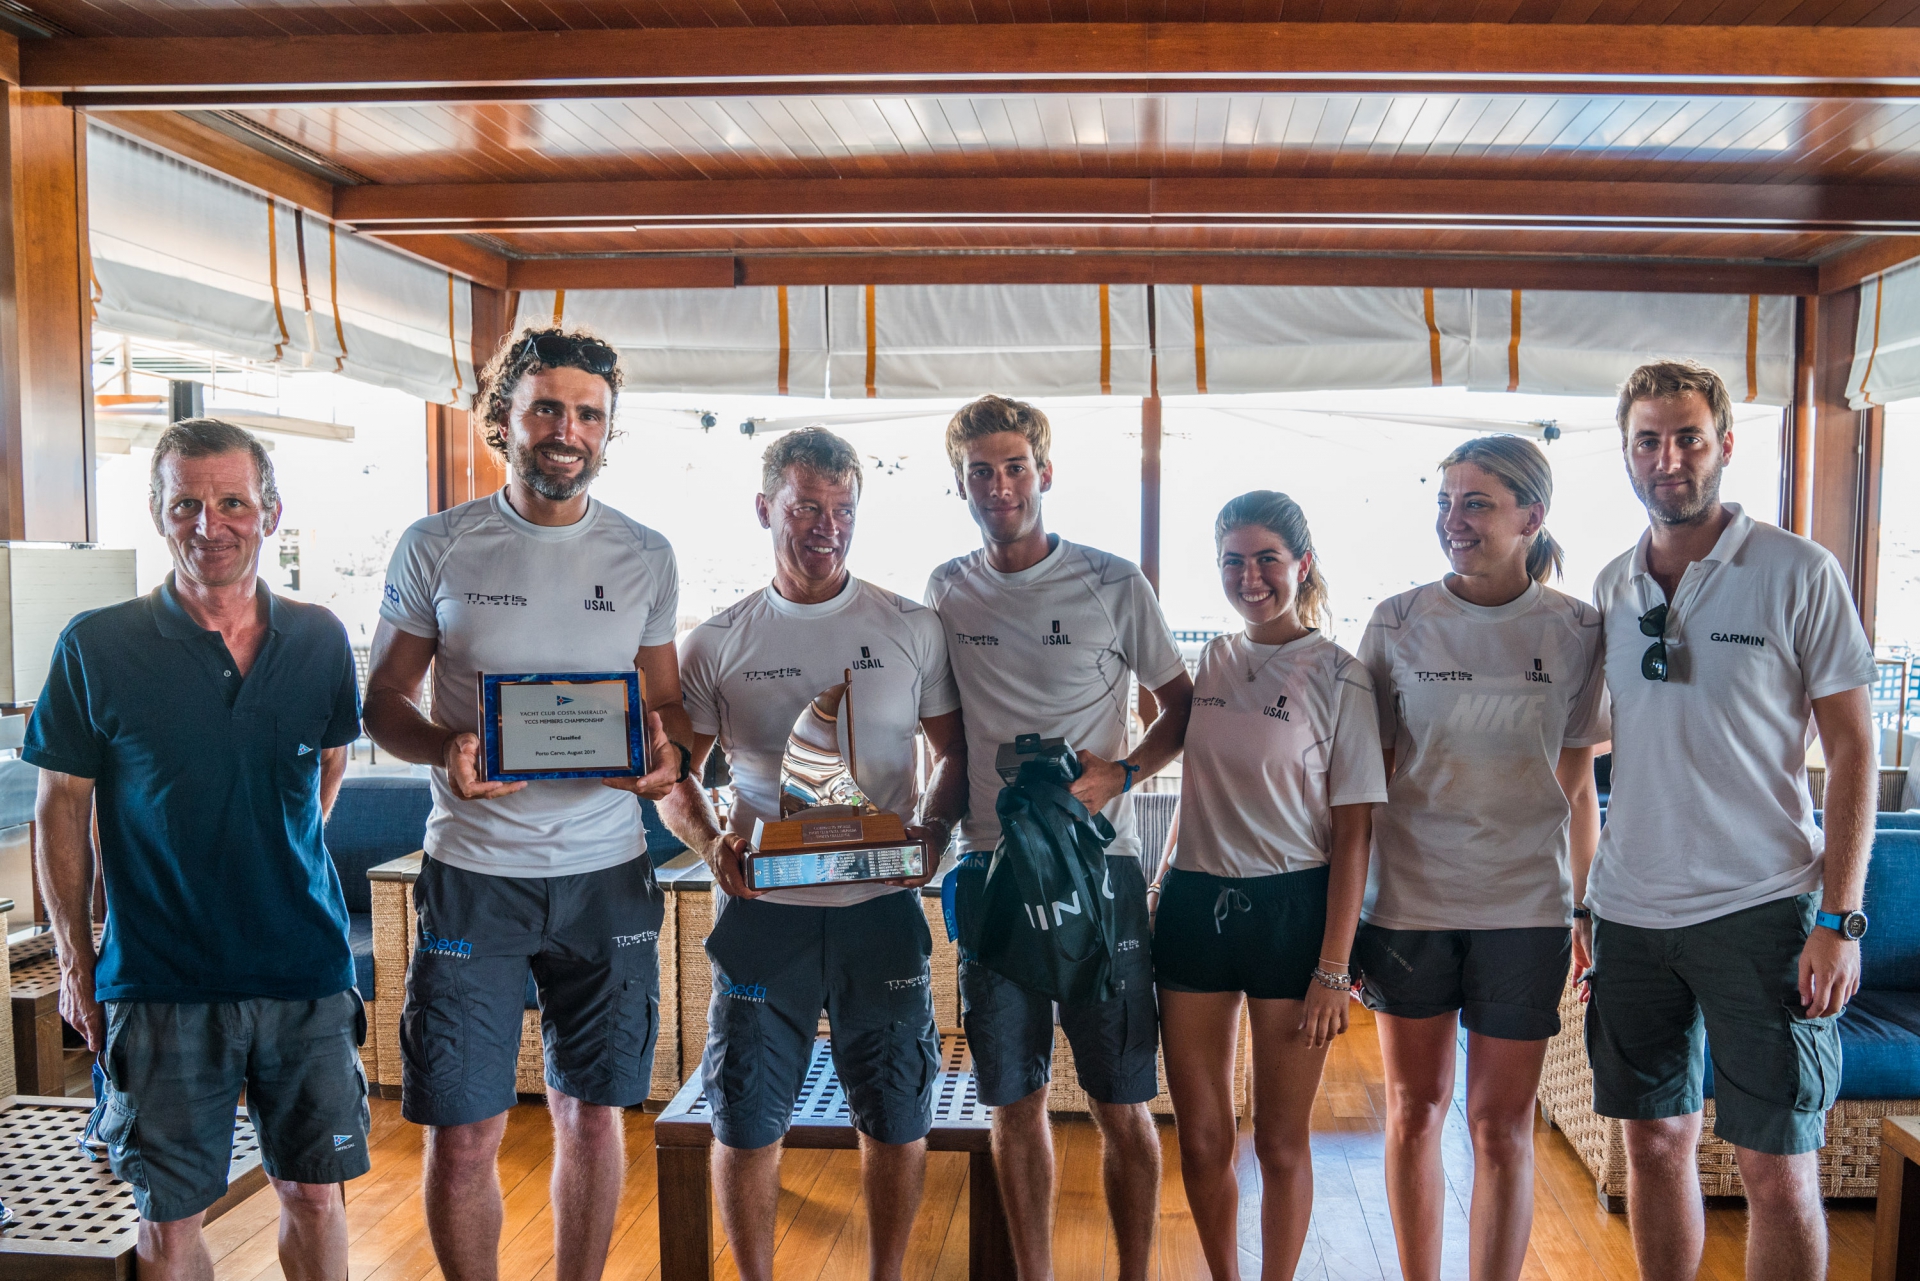 Luca Locatelli crowned Members' Champion 2019 - NEWS - Yacht Club Costa Smeralda